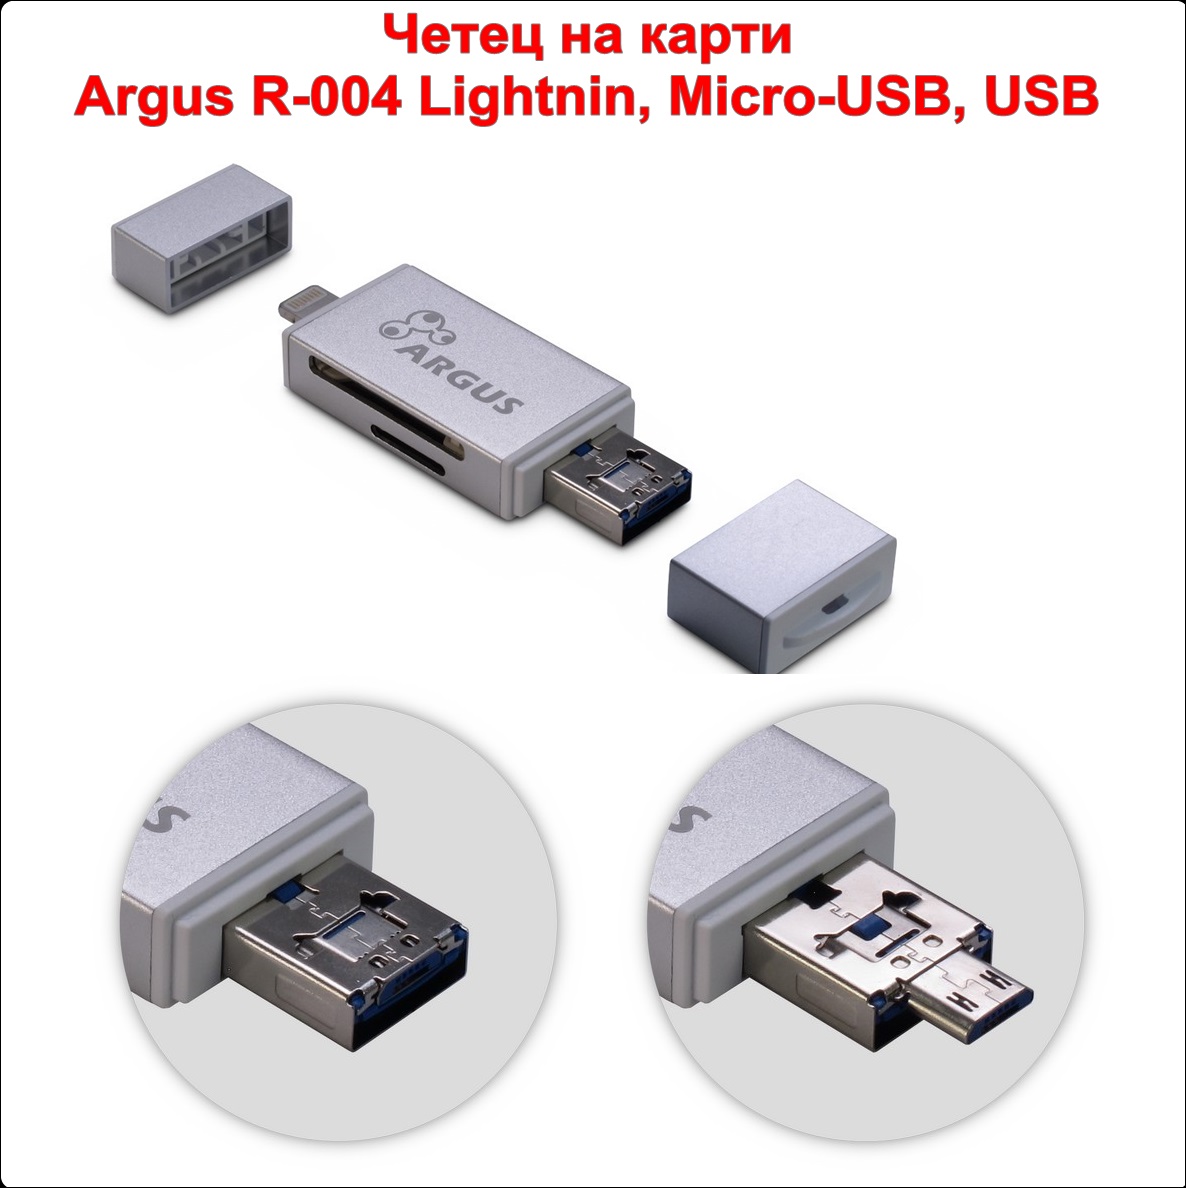 Четец за карти Argus R-004 (Lightnin, Micro-USB)